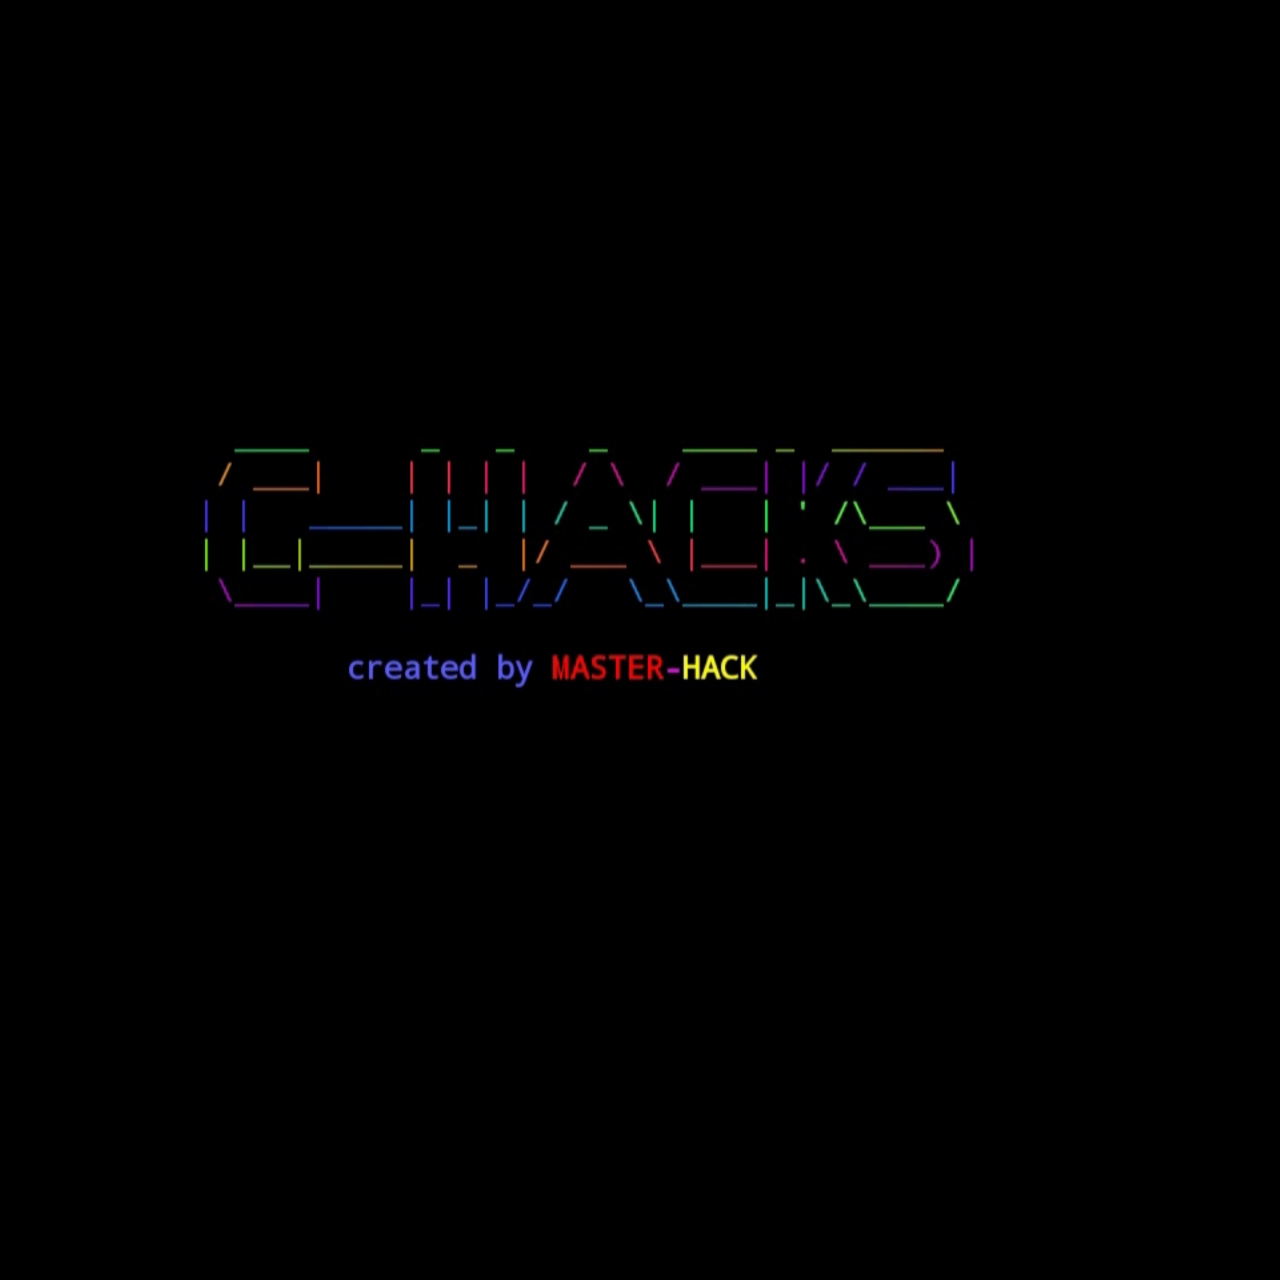 C-hacks